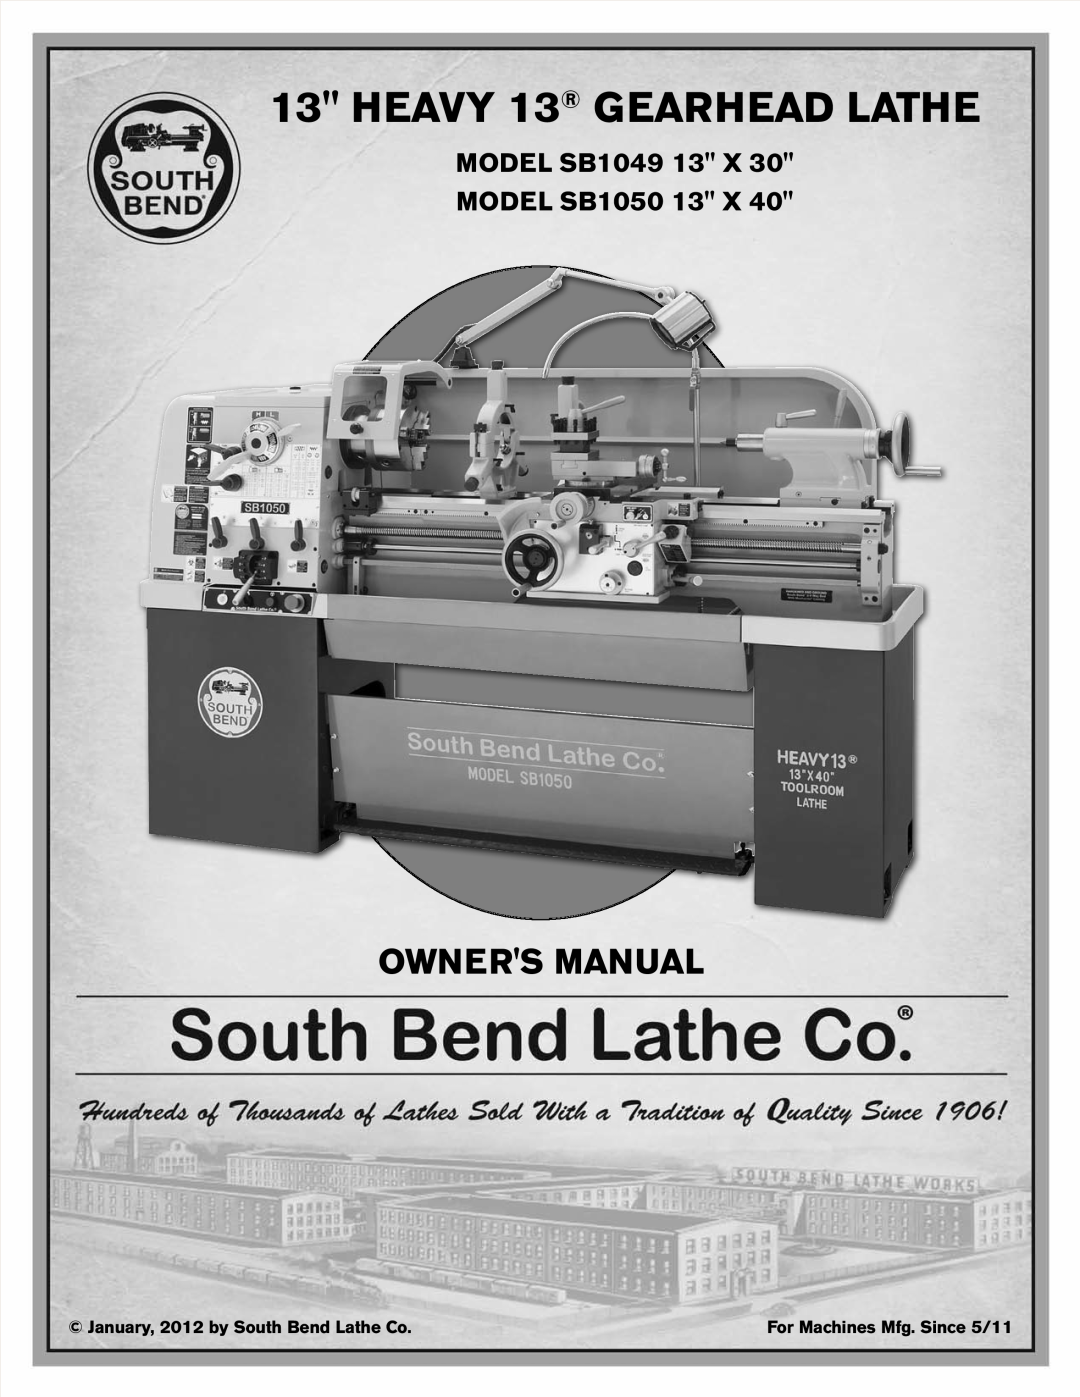 Southbend owner manual HEAVY 13 GEARHEAD LATHE, MODEL SB1049 13 X MODEL SB1050 13 X, Owners Manual 